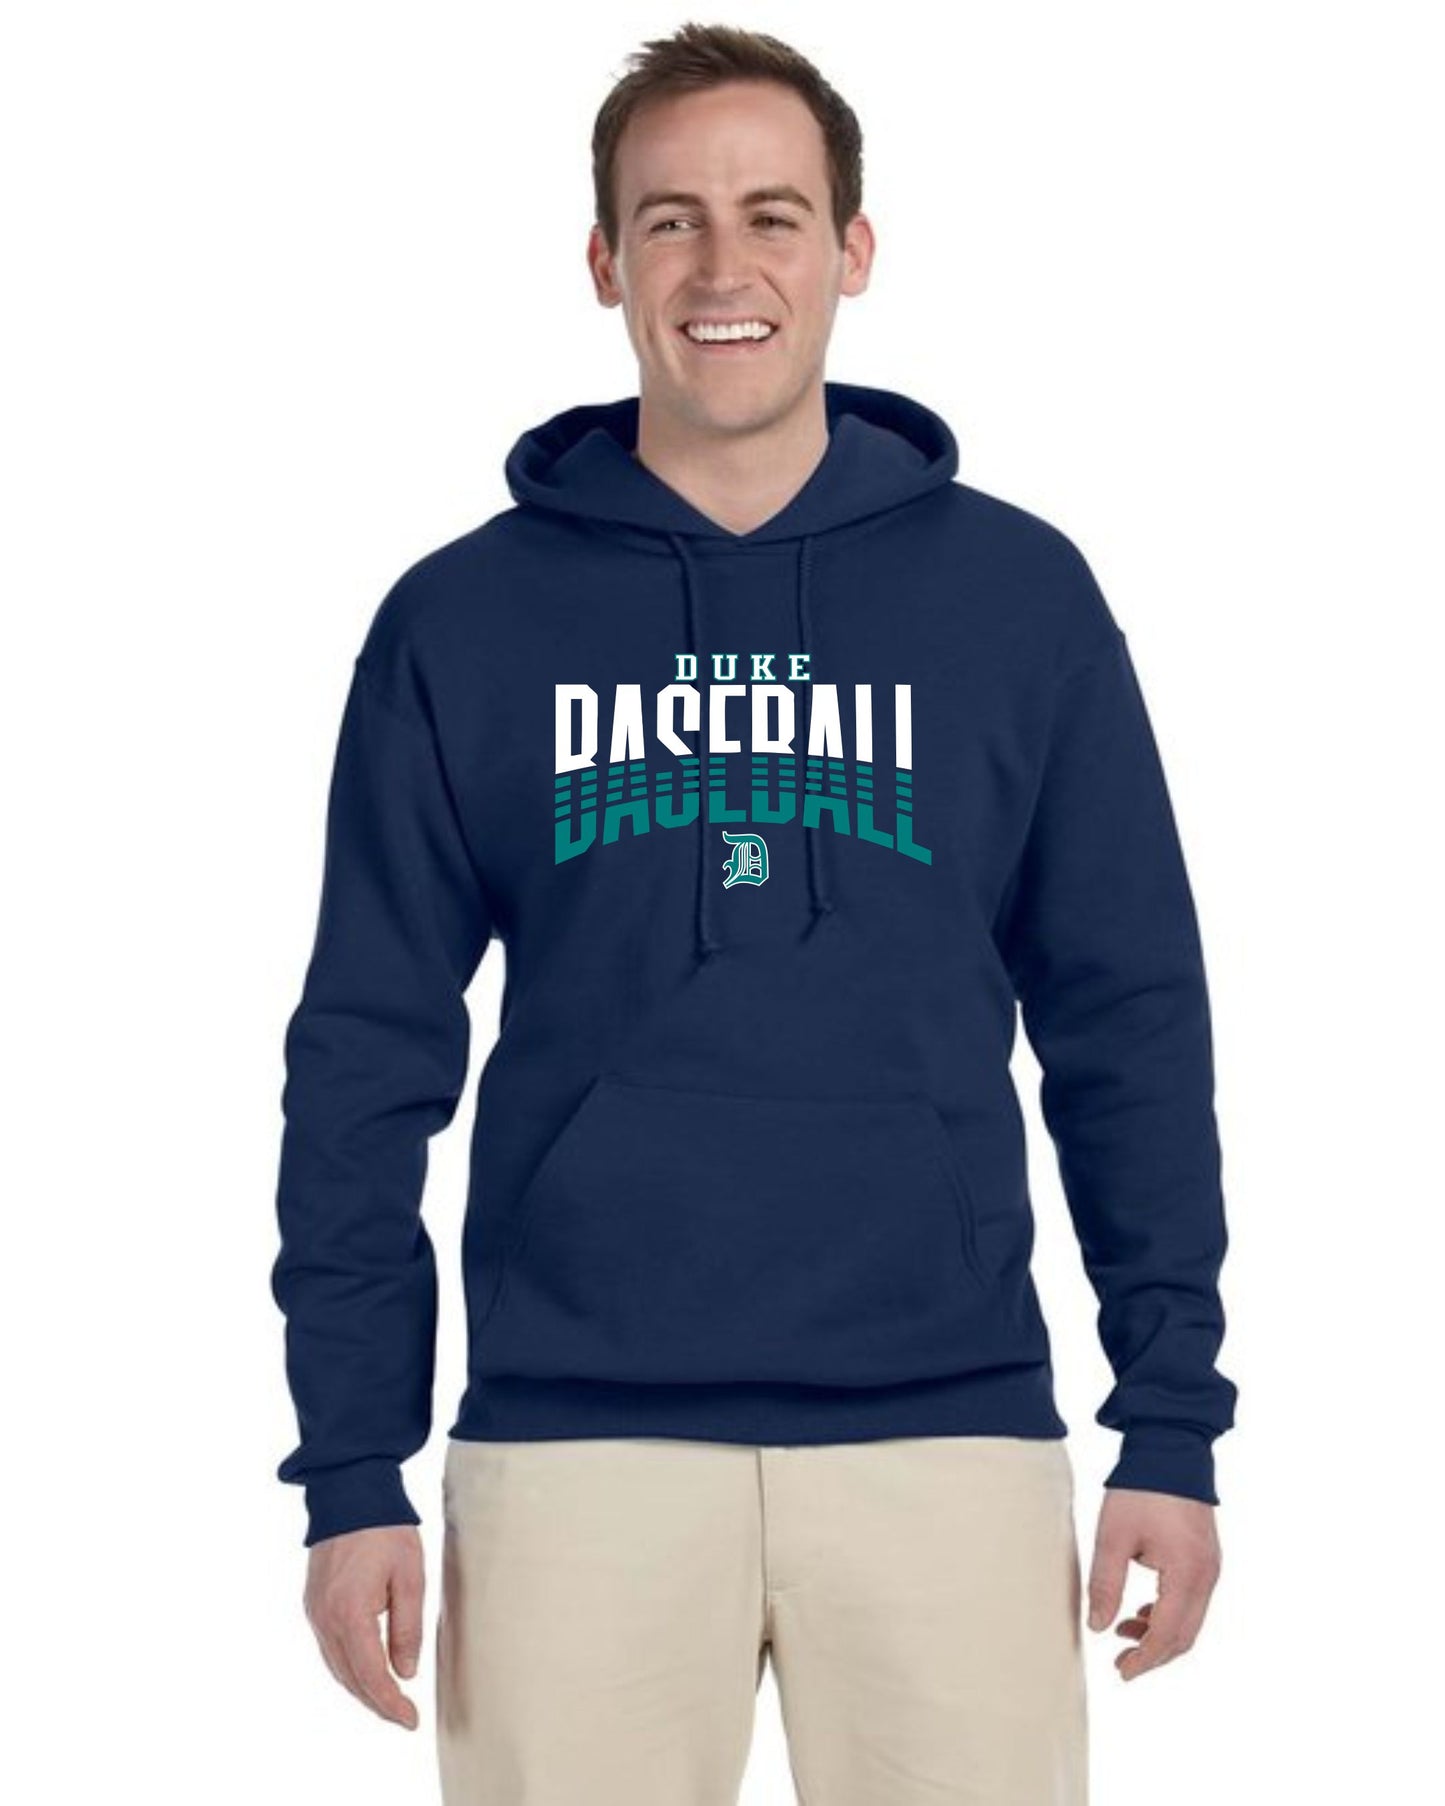 Duke Baseball Striped 50/50 Outerwear